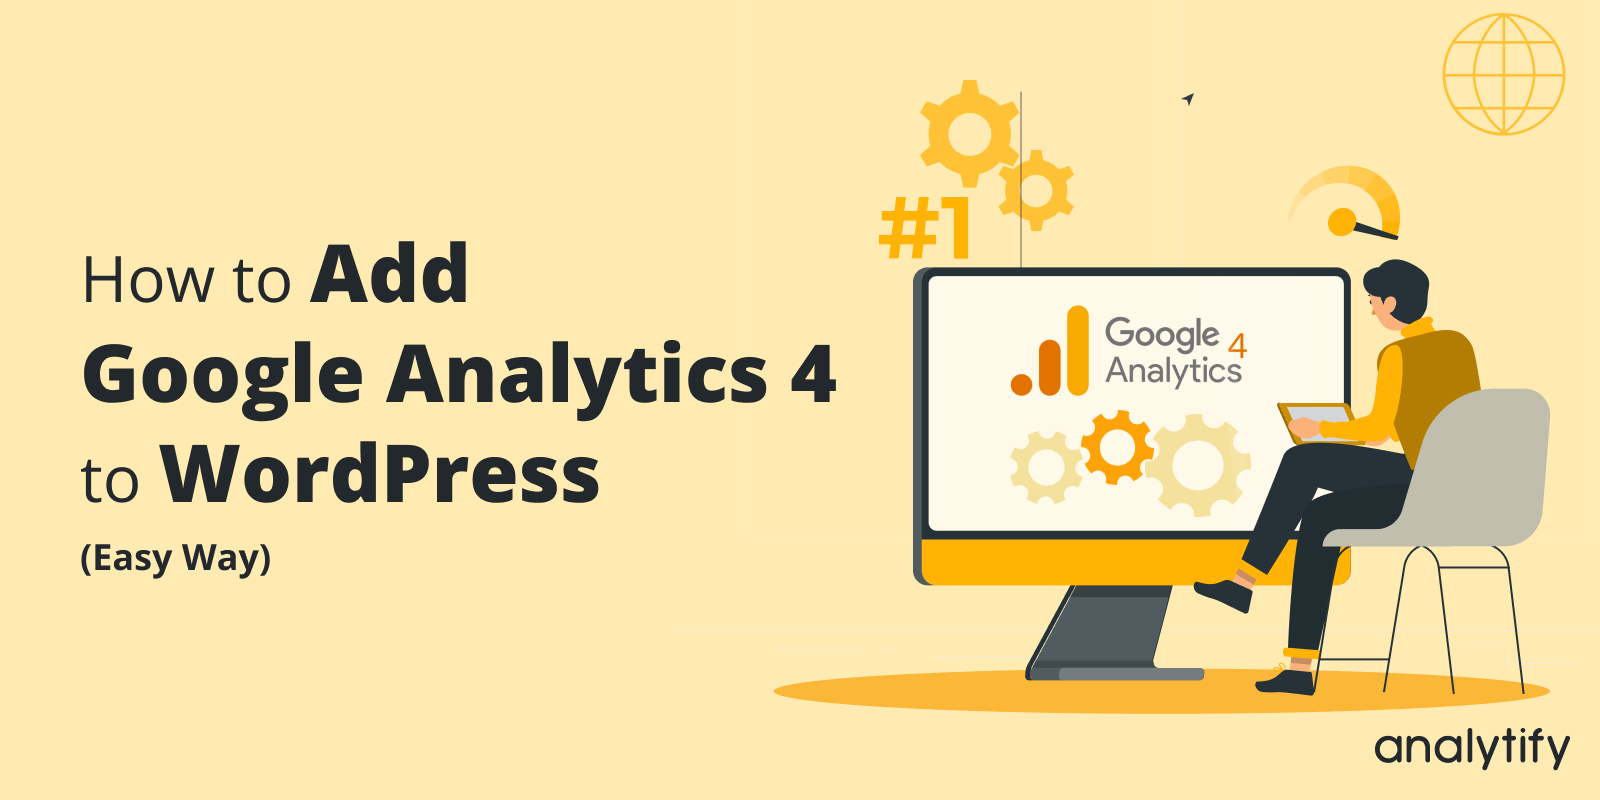 how to add Google Analytics 4 to WordPress